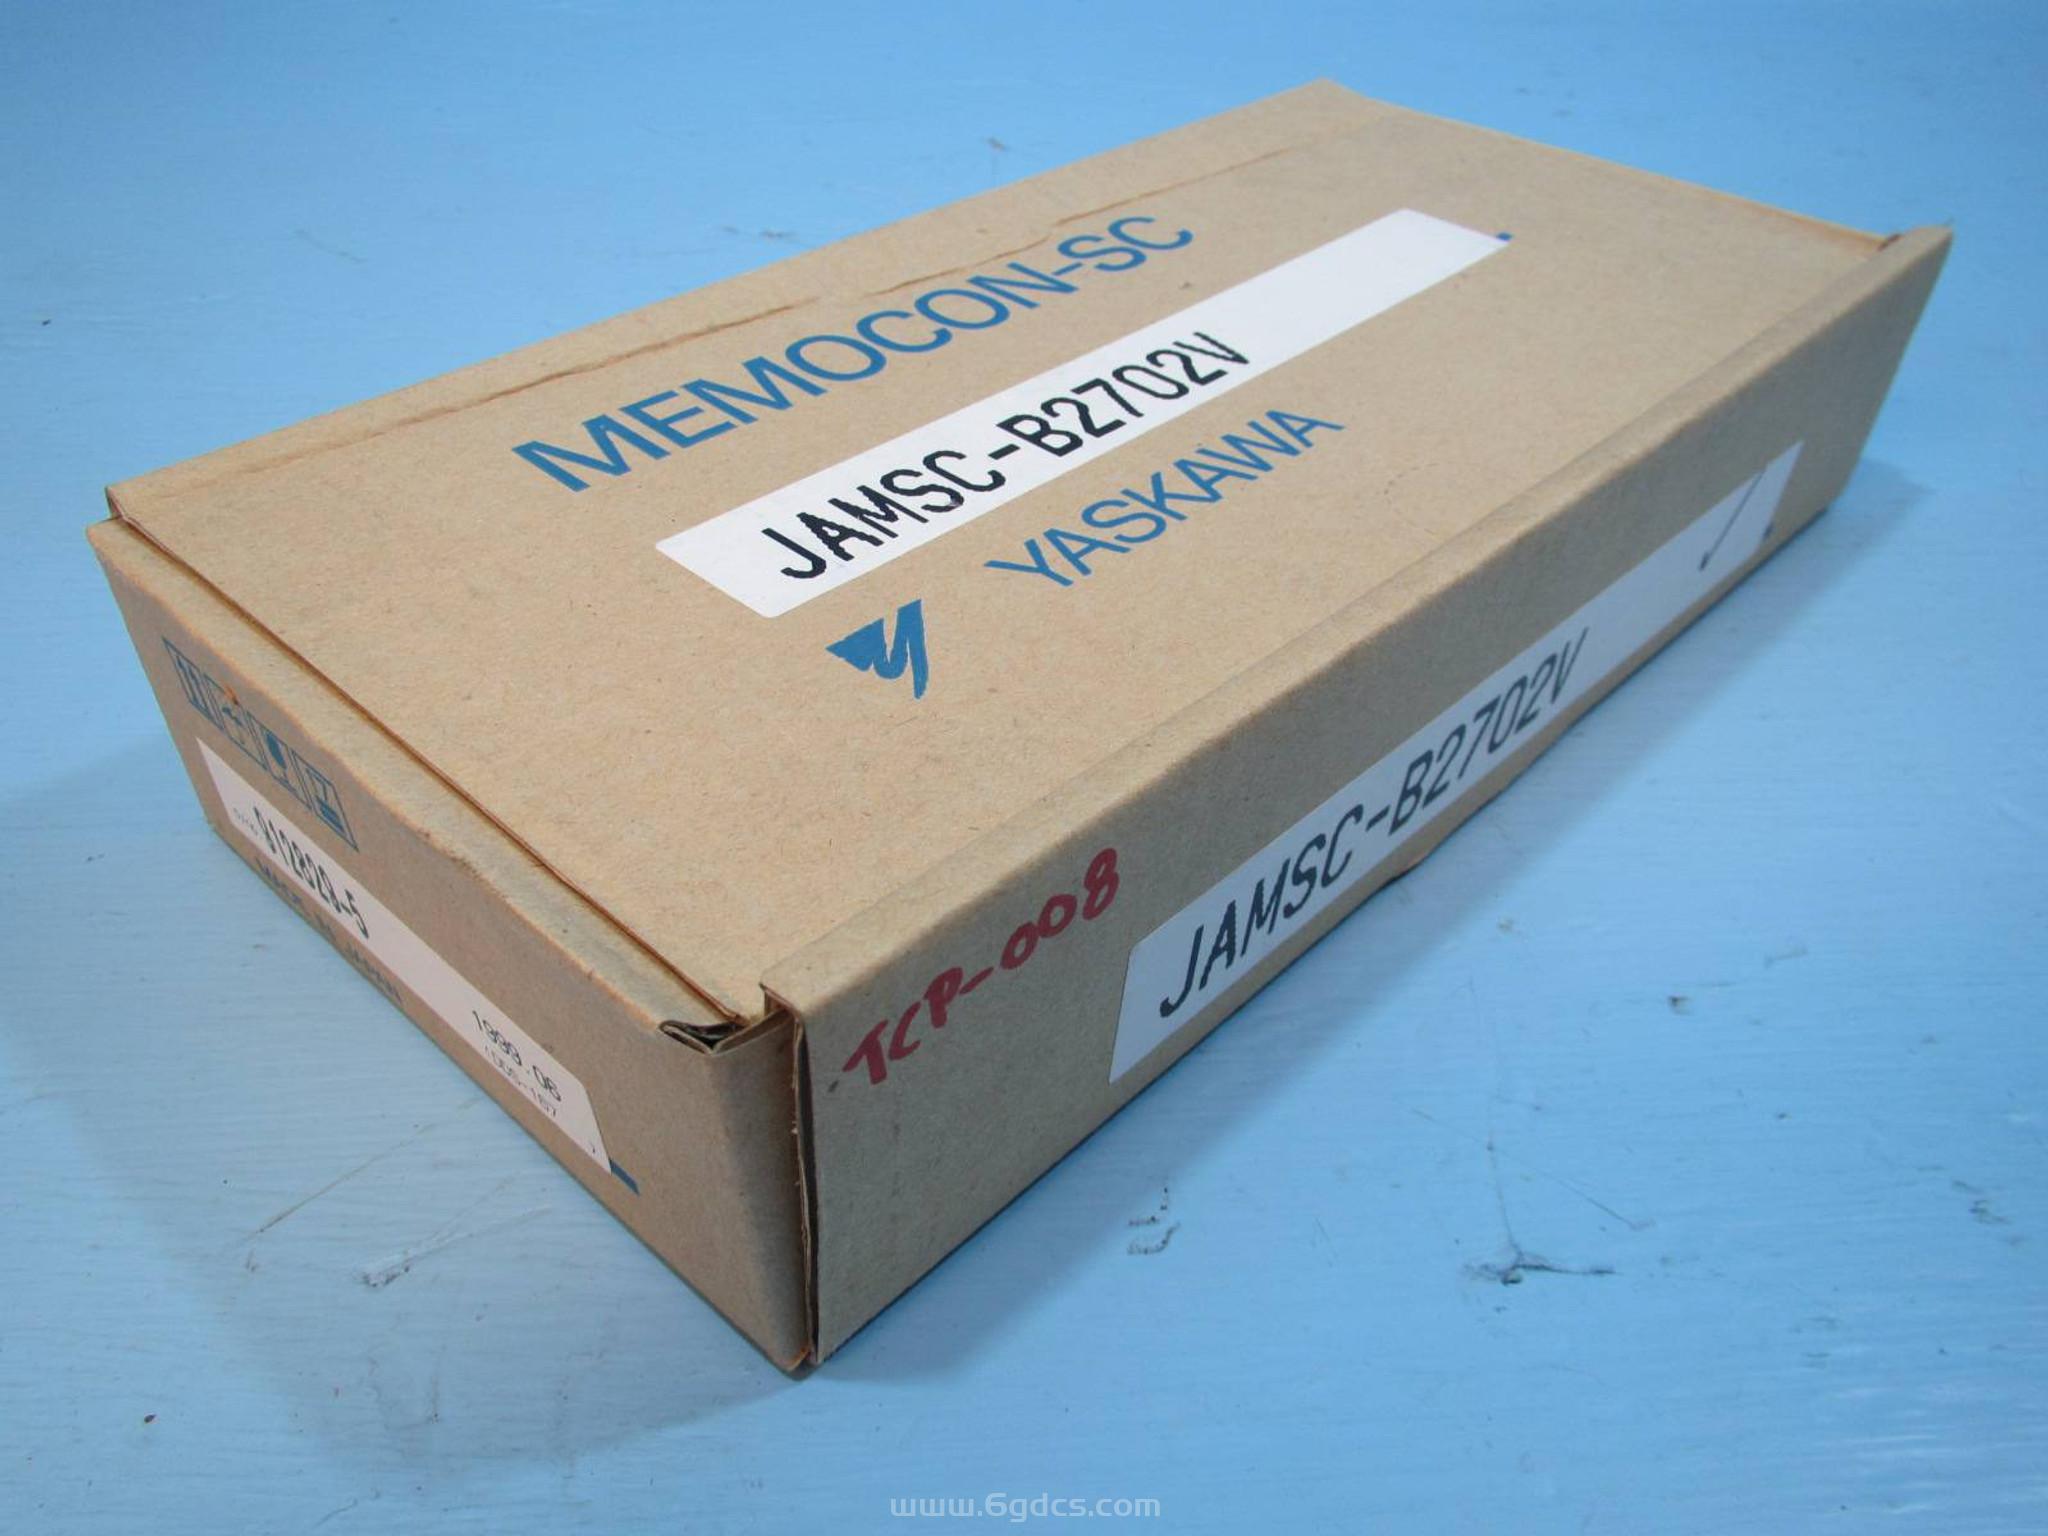 (DF9300131-H2E JAMSC-B2500 模块) 品牌 YASKAWA 安川  原装进口 正品全新 库存现货可供